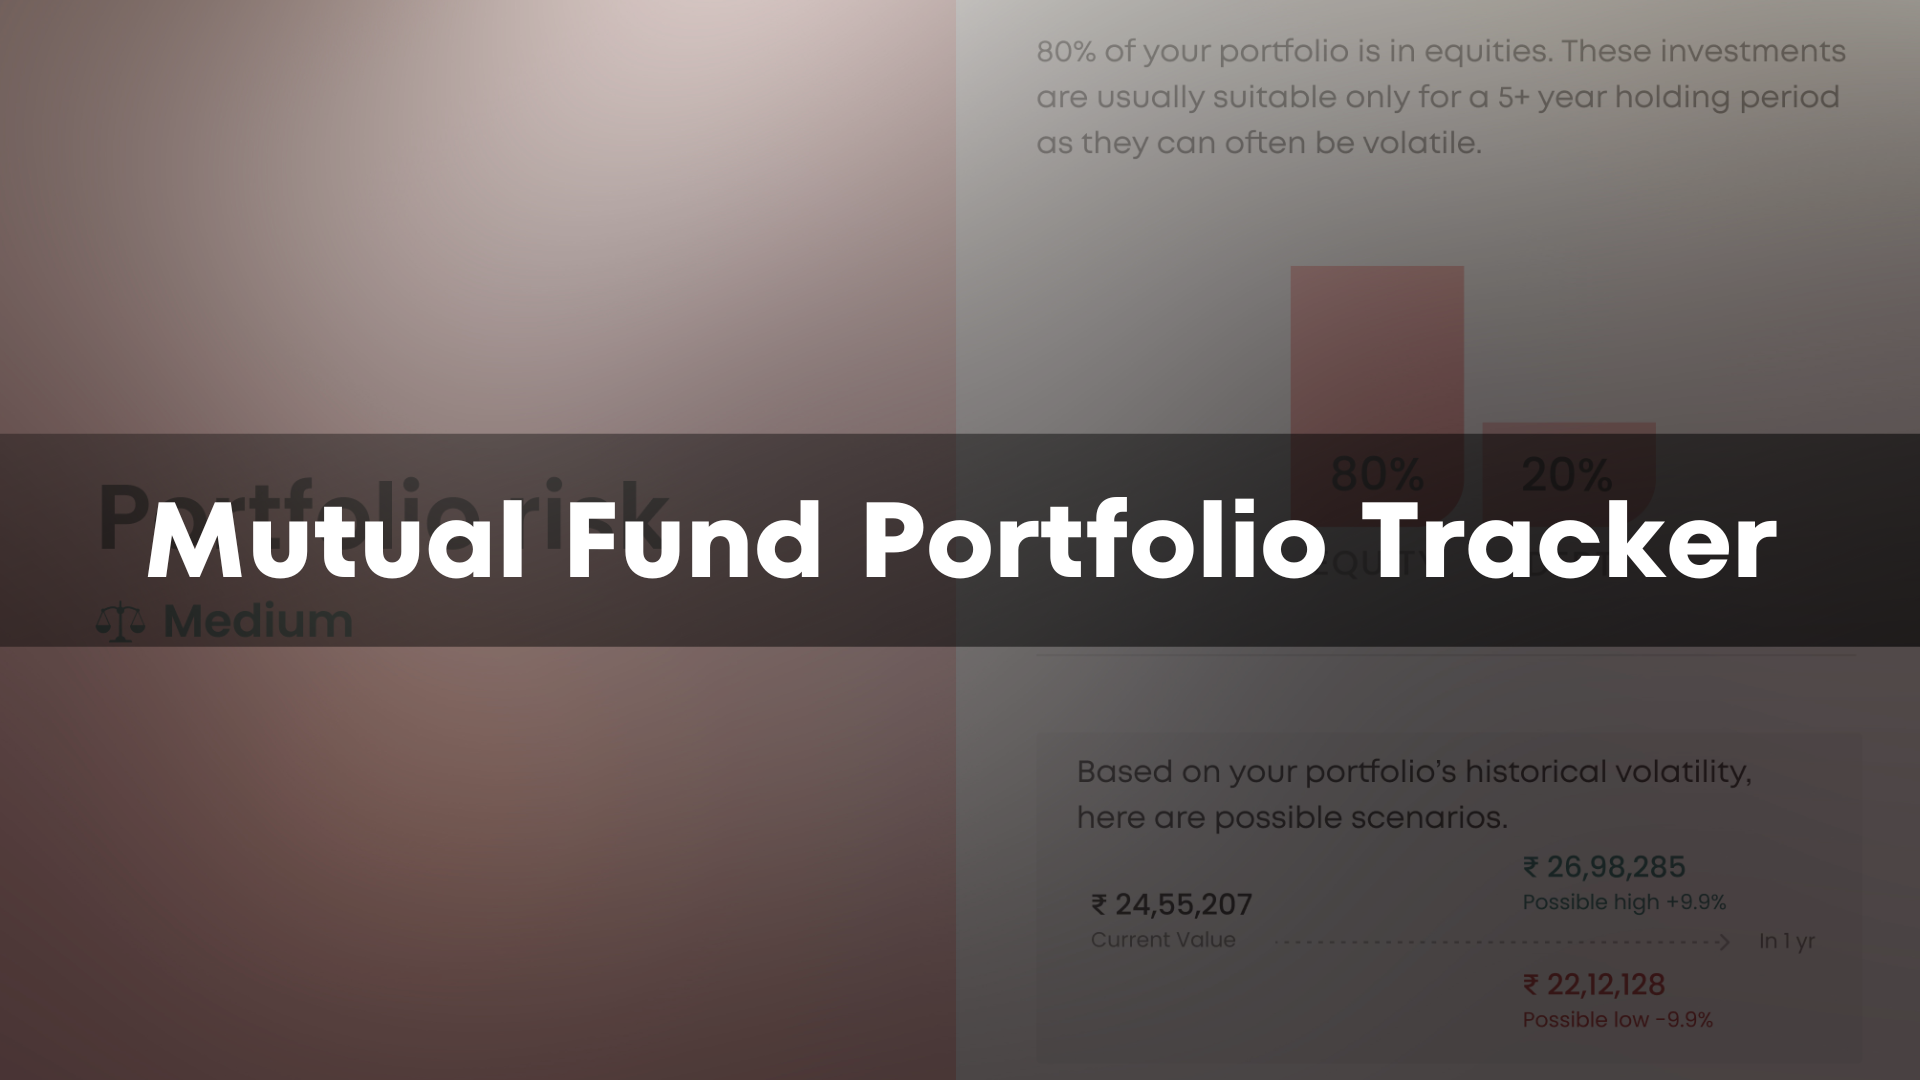 Mutual Fund Portfolio Tracker: Methods and Benefits of Tracking a Mutual Fund Portfolio